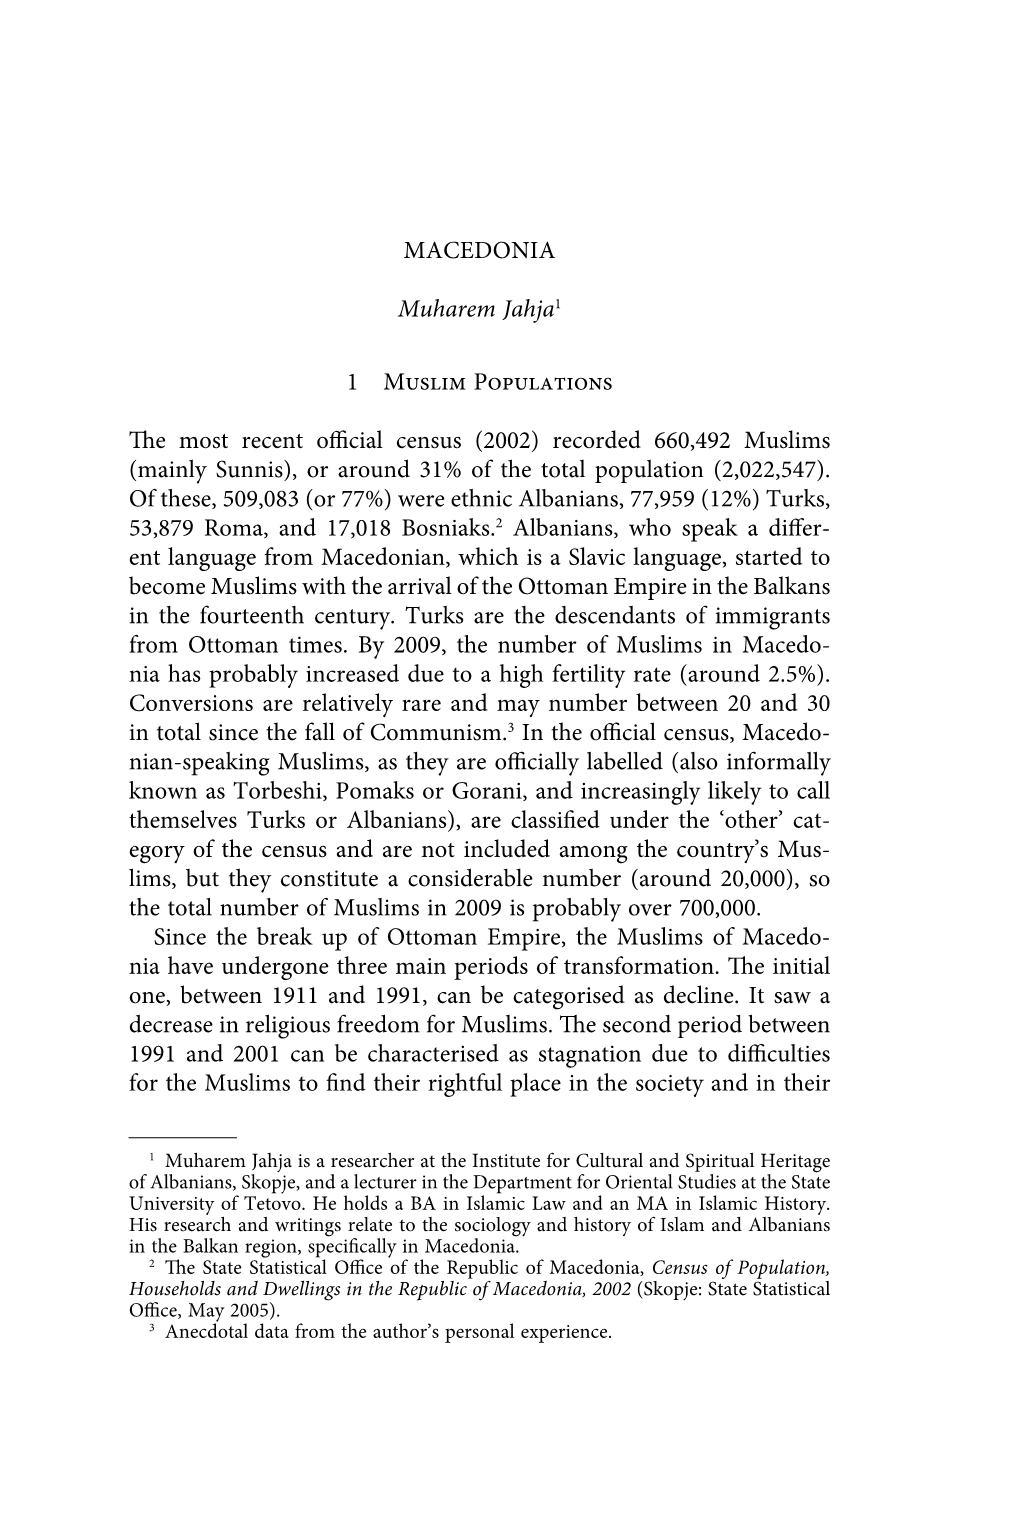 MACEDONIA Muharem Jahja1 1 Muslim Populations the Most Recent Official Census